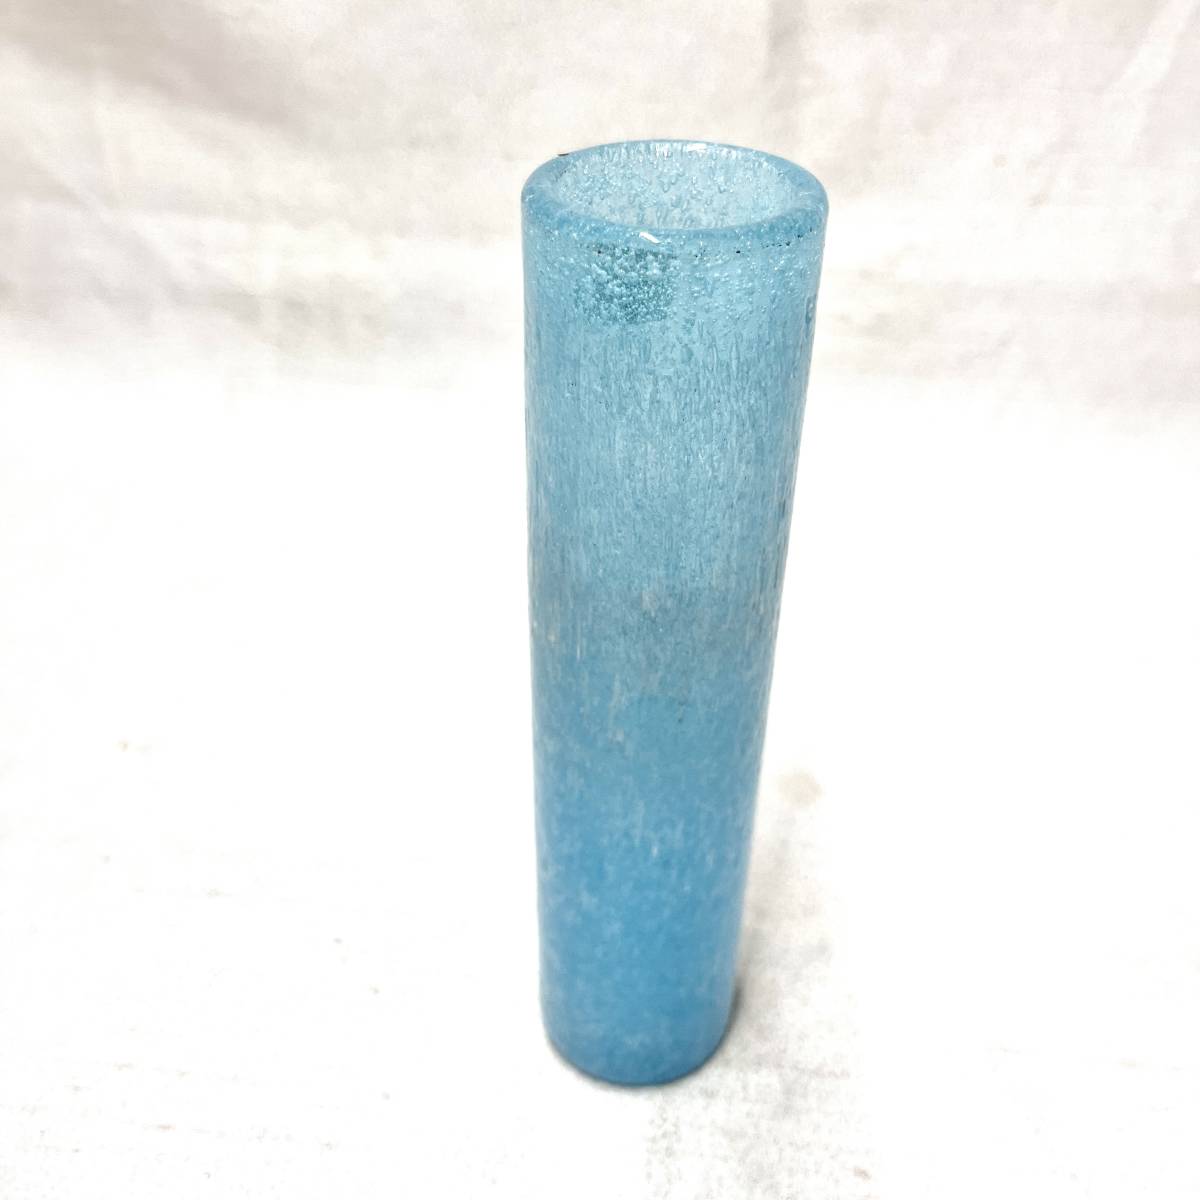  один колесо ... лампочка стекло рука ... ателье бледно-голубой ваза для цветов ваза цветок основа (3716)